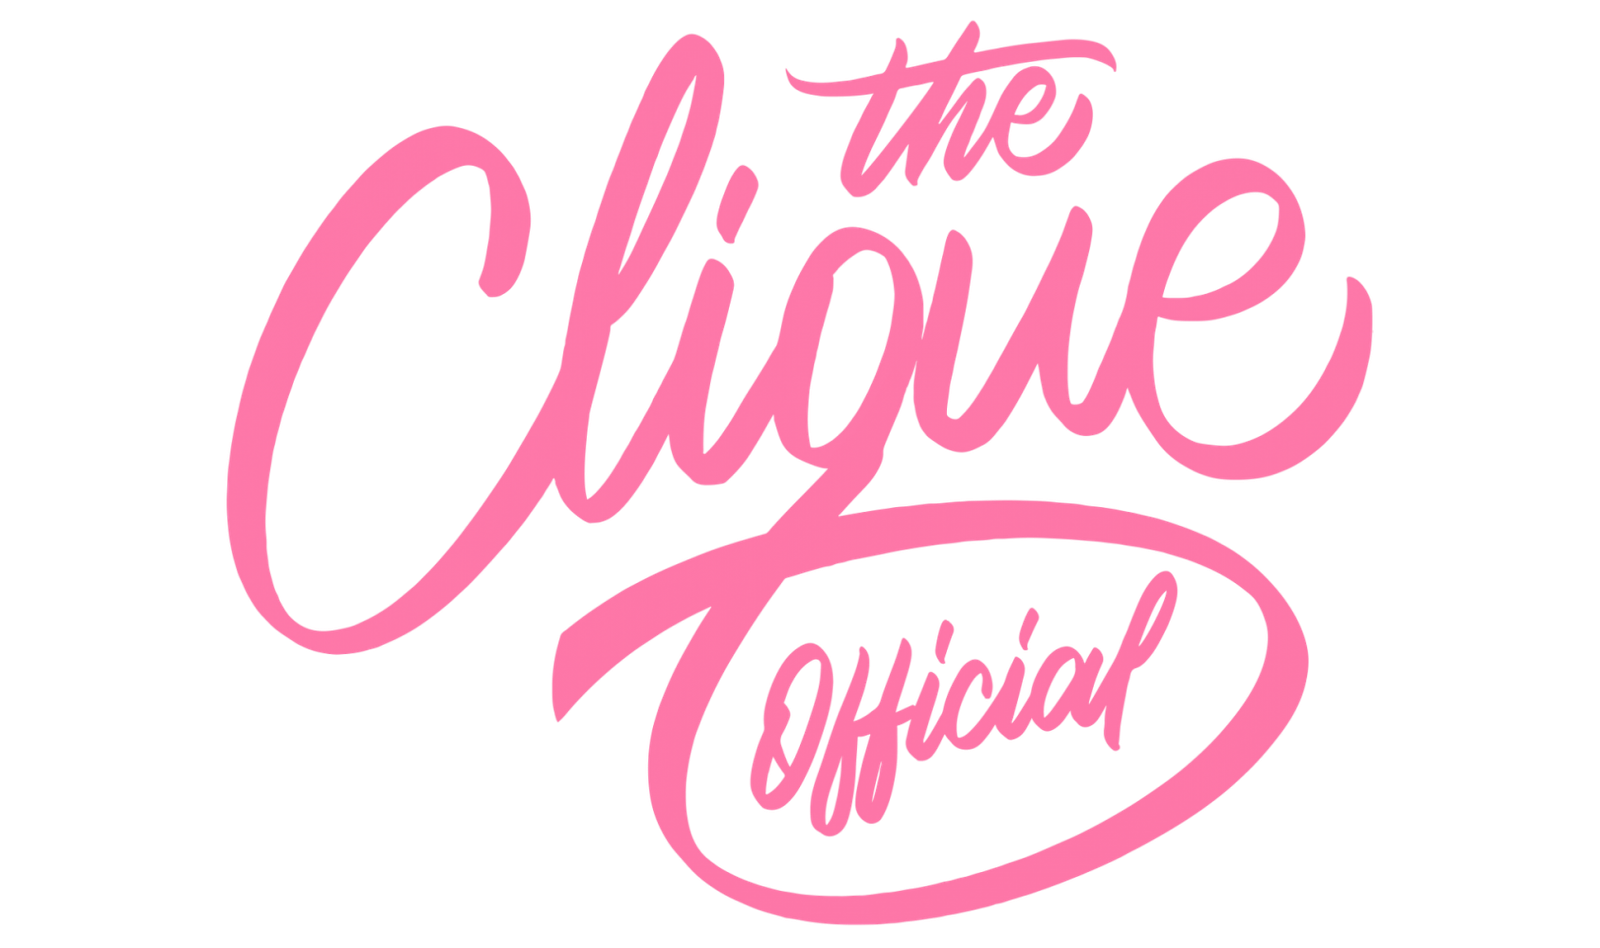 The Clique Official